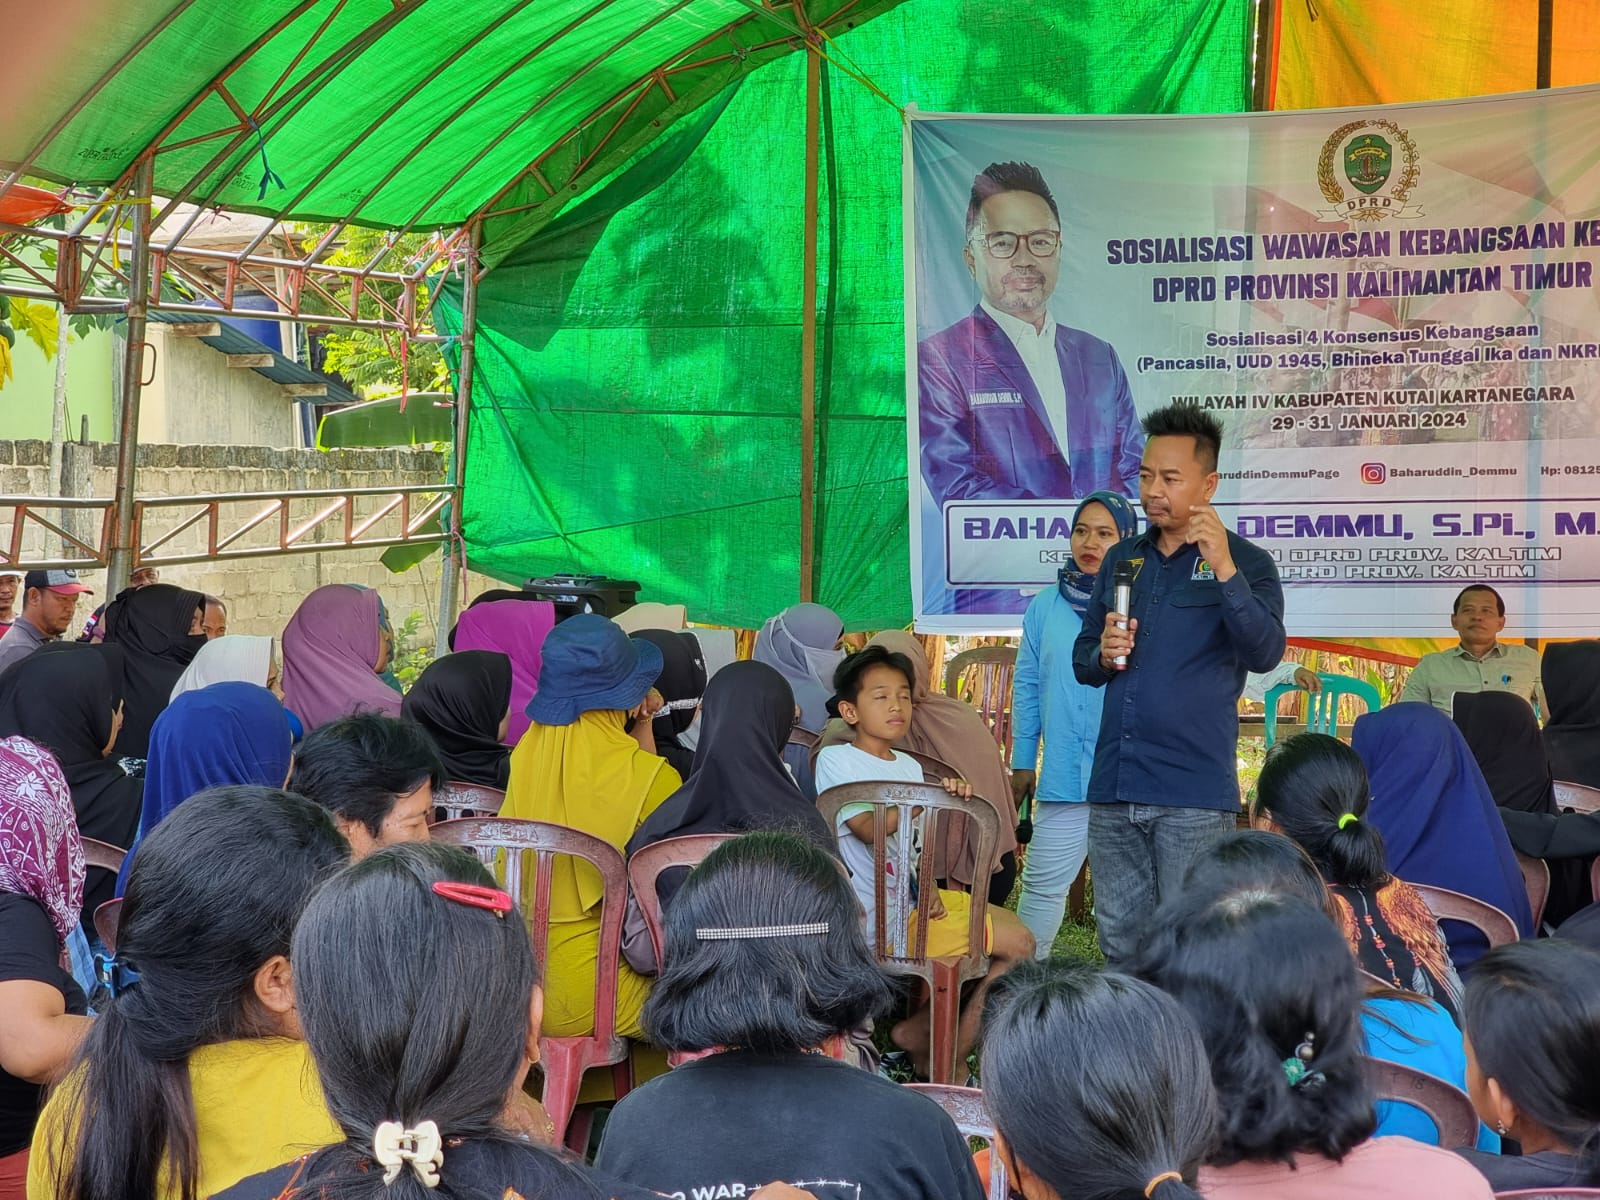 Agenda Sosialisasi Wawasan Kebangsaan (Sosbang) ke-1 Anggota DPRD Kalimantan Timur, Baharuddin Demmu di Desa Sebuntal, Kecamatan Marang Kayu, Kutai Kartanegara.